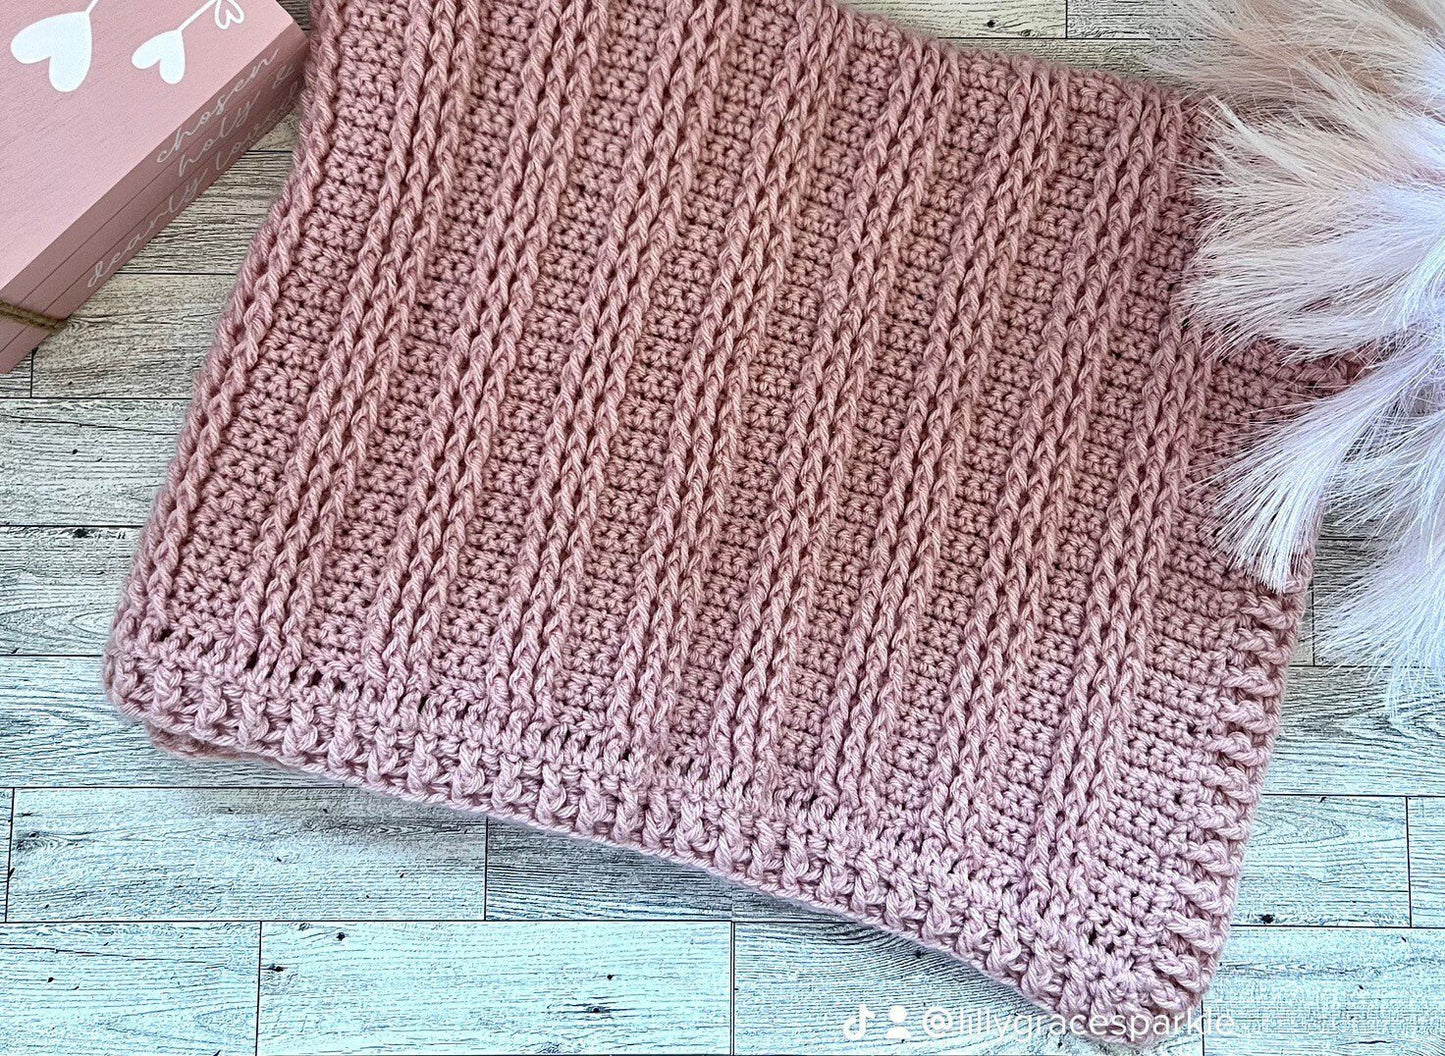 Victorian rose pink blanket for baby girl handmade, baby shower gift for baby girl, modern heirloom baby blanket 31”x26” cradle blanket - Lilly Grace Sparkle Boutique